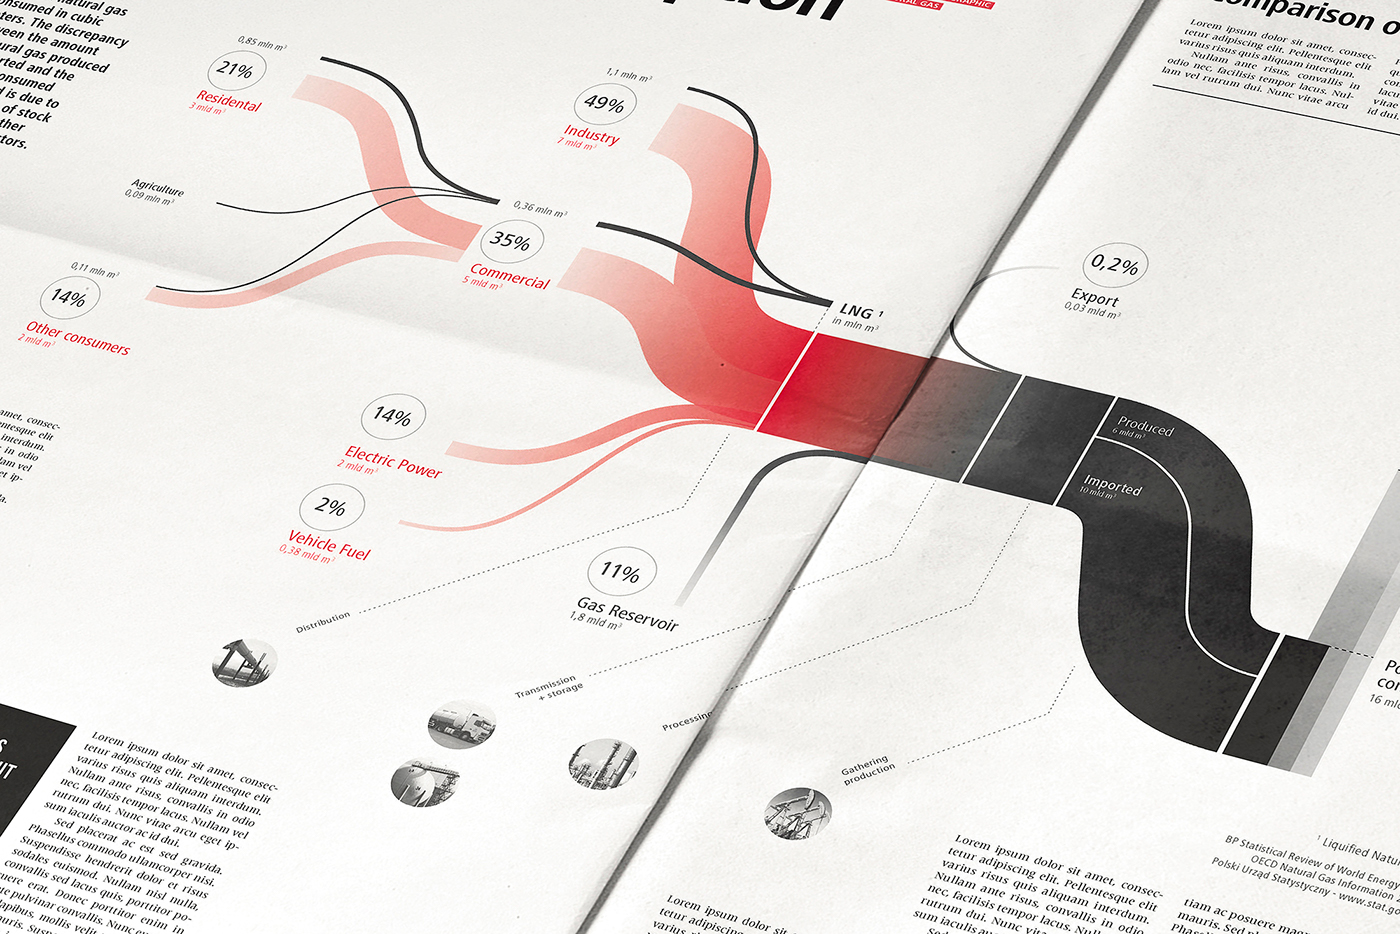 newspaper editorial news print infographic sto9 data visualisation Layout Fraktur bold